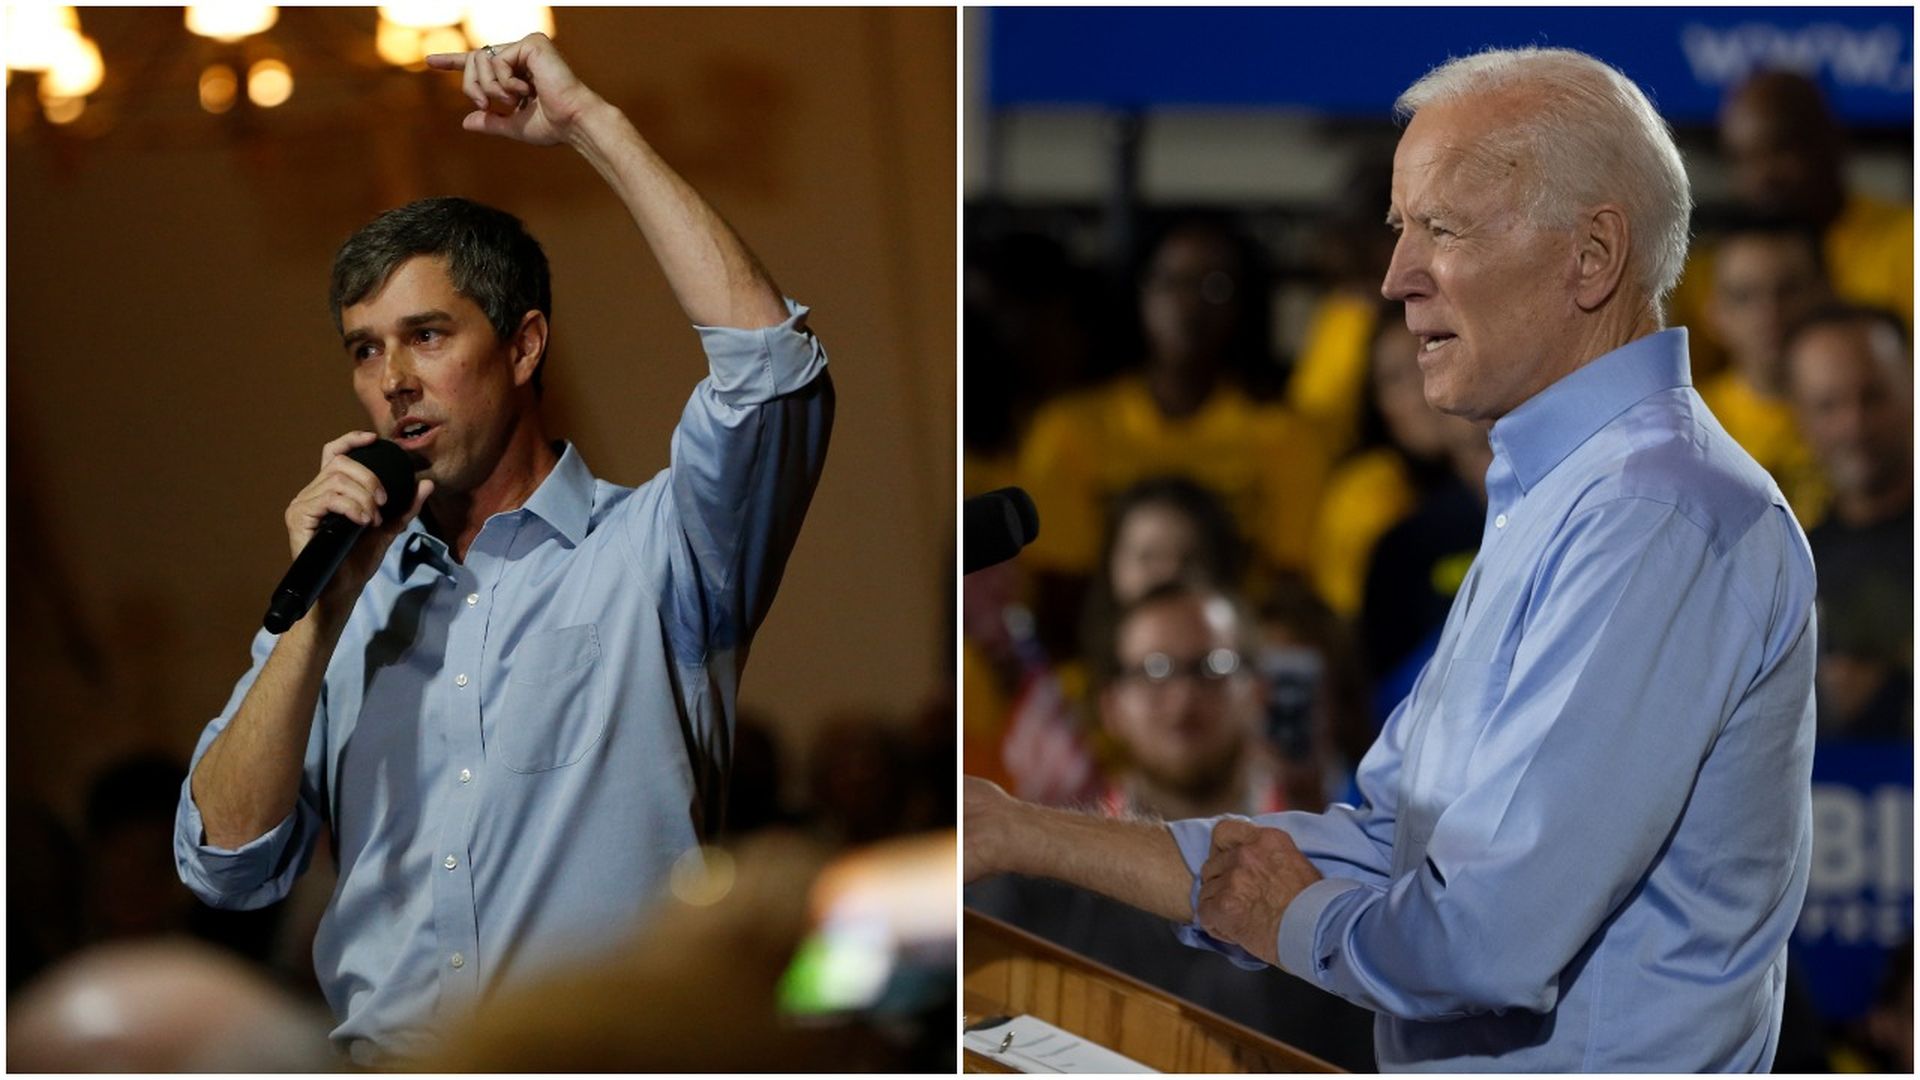 This image is a two-way split screen between Joe Biden and Beto O'Rourke